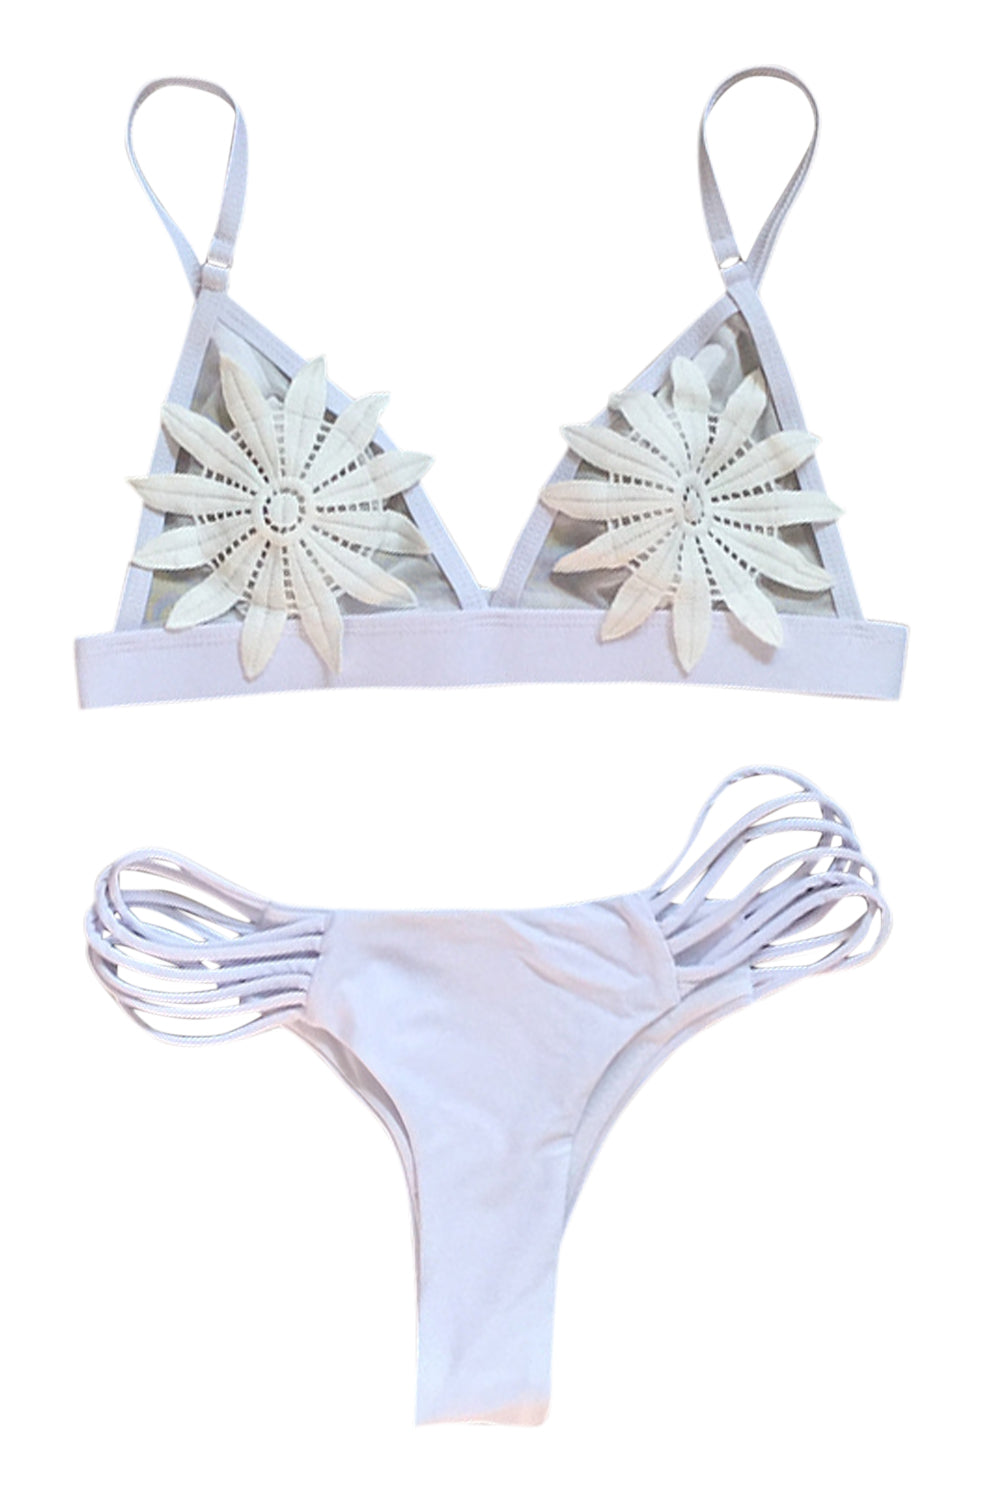 Iyasson Flower Crochet Triangle Top Bikini Set